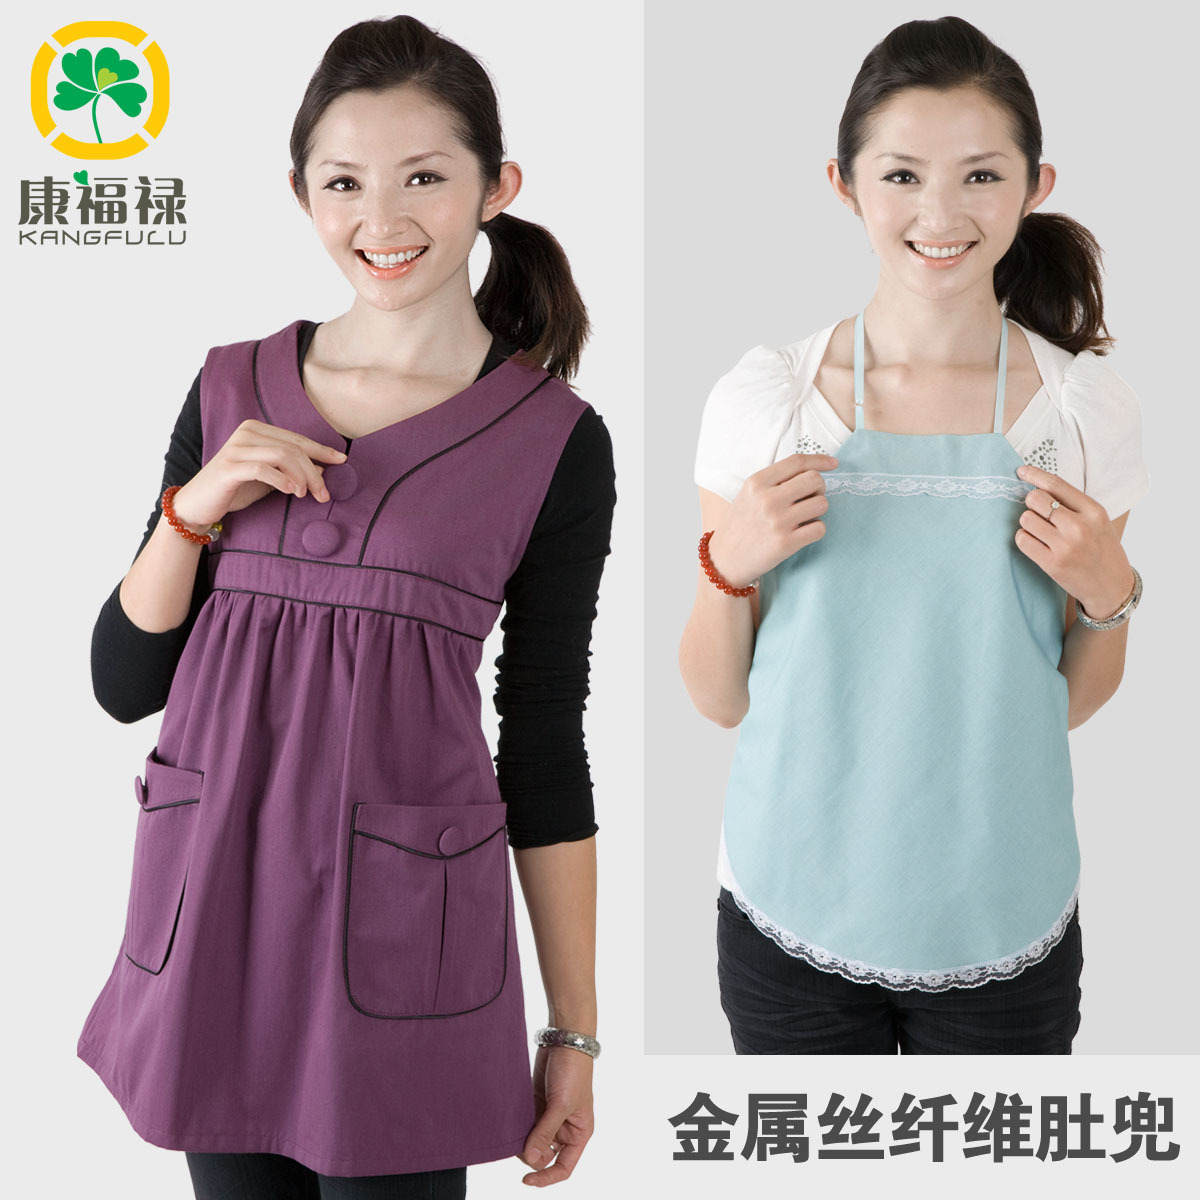 Maternity radiation-resistant 908 maternity clothing